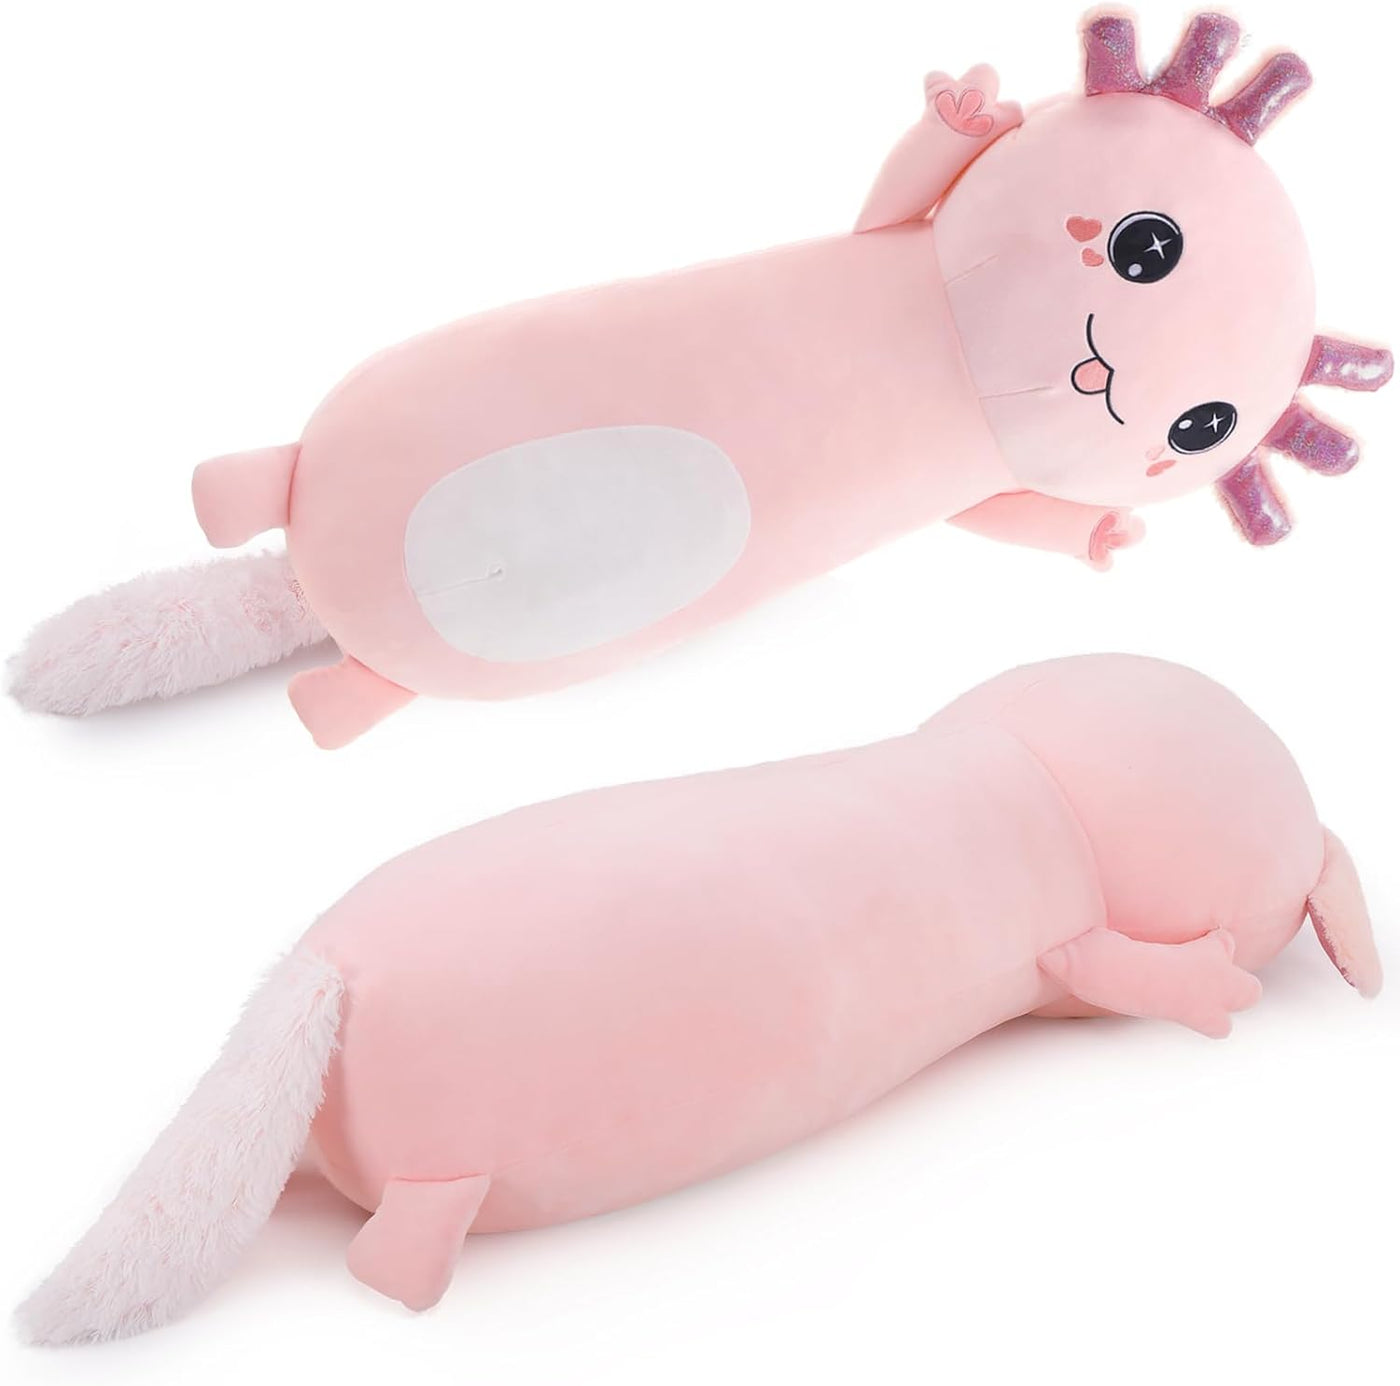 Axolotl Long Throw Pillow, Pink, 35.4 Inches